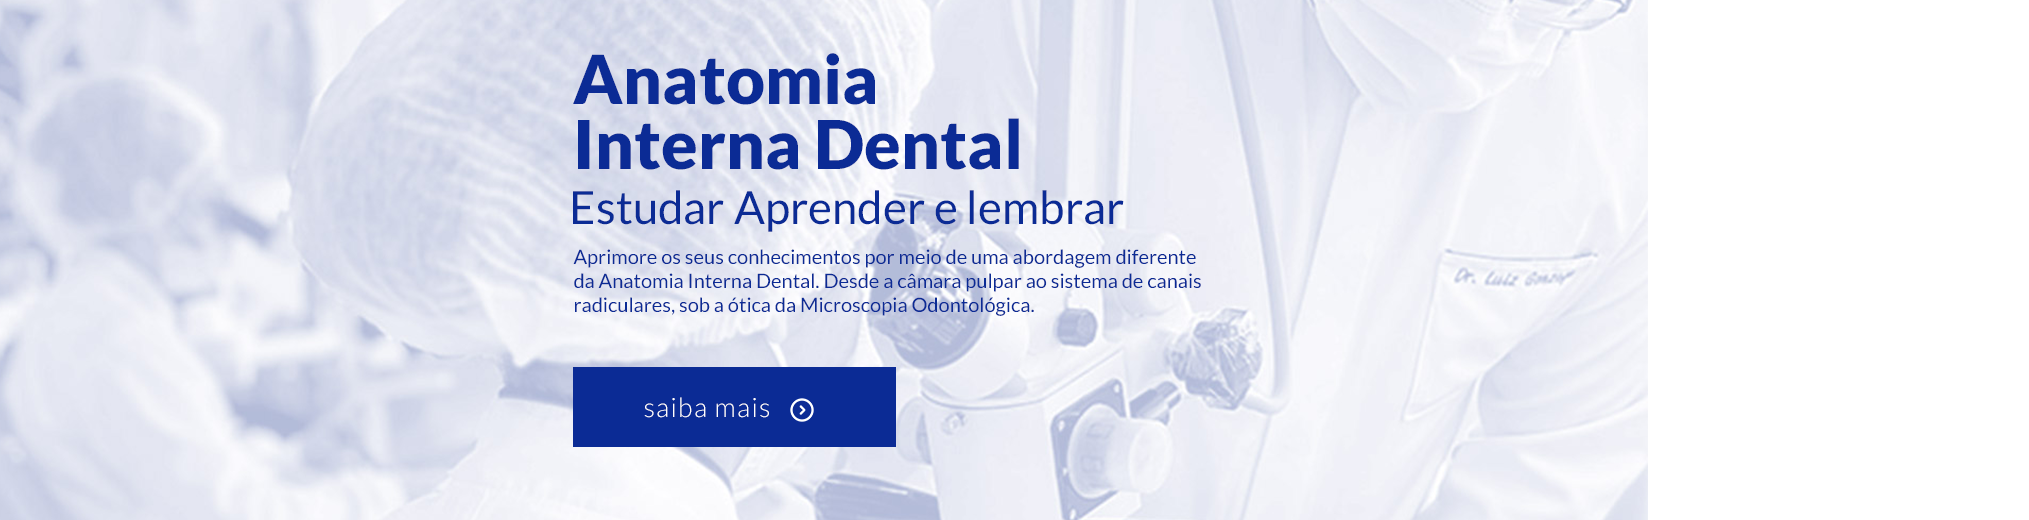 Anatomia Interna Dental